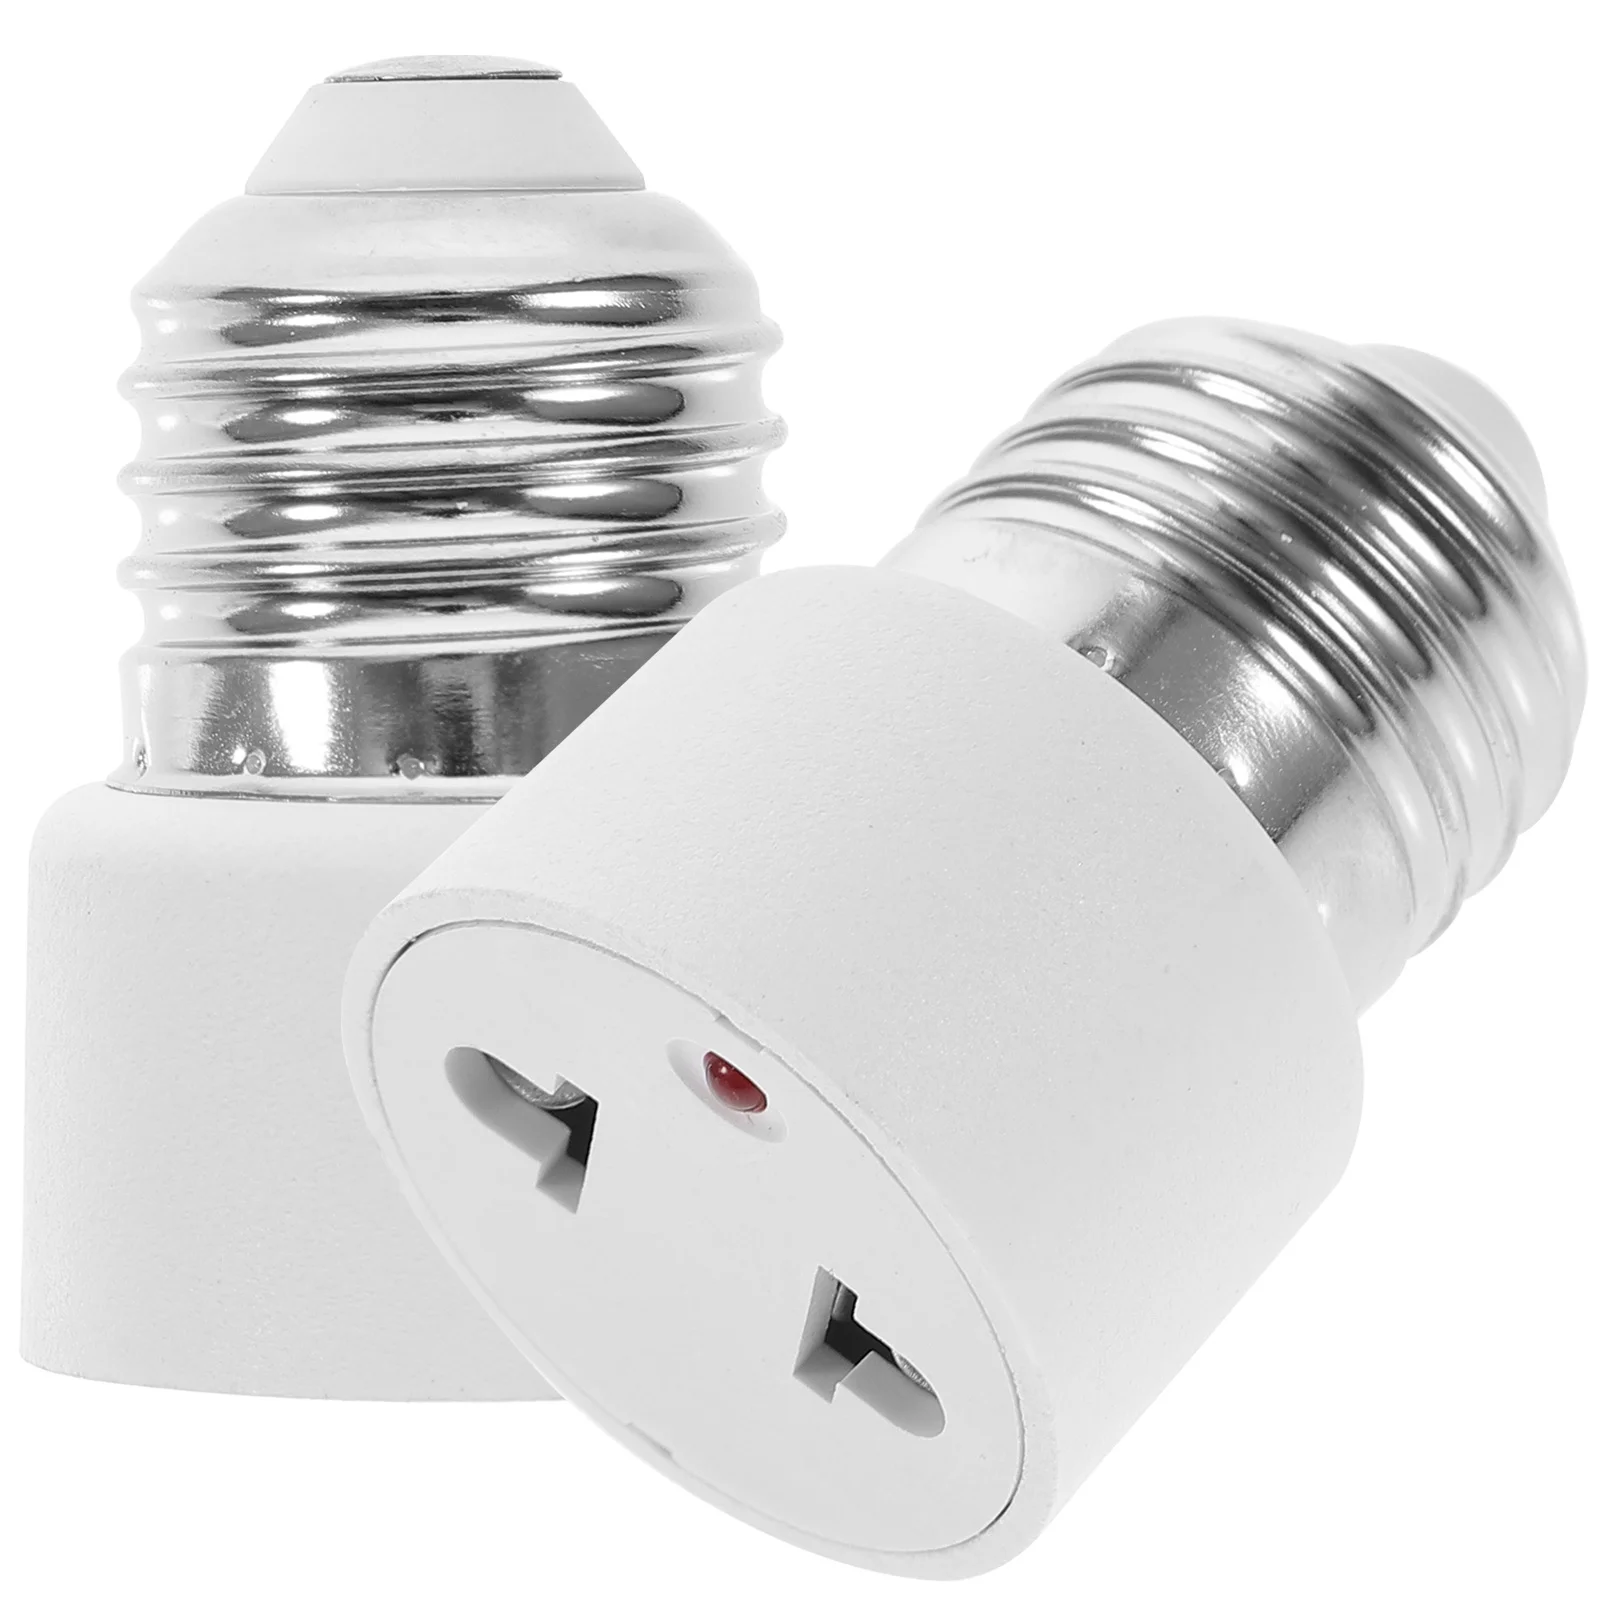 

2 Pcs E27 Converter Bulb Socket Outlet Splitter Light Plug Adapter Lighting Accessory Copper Lamp Holder E26 To eu keramic